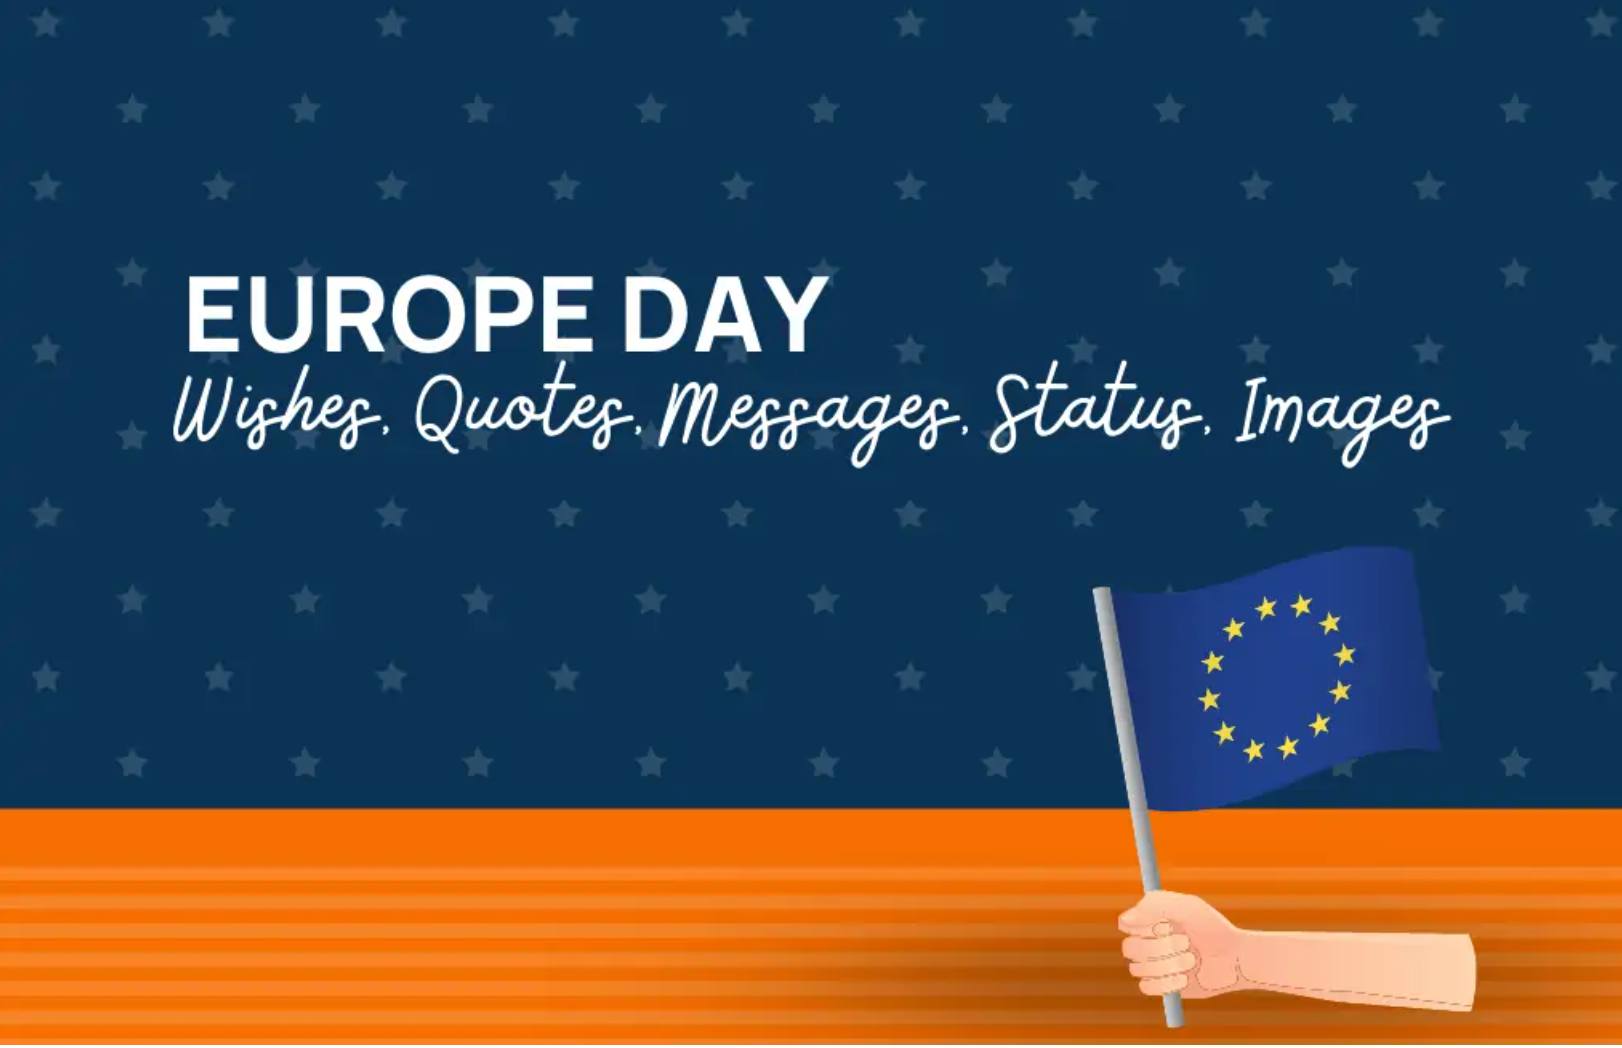 Happy Europe Day